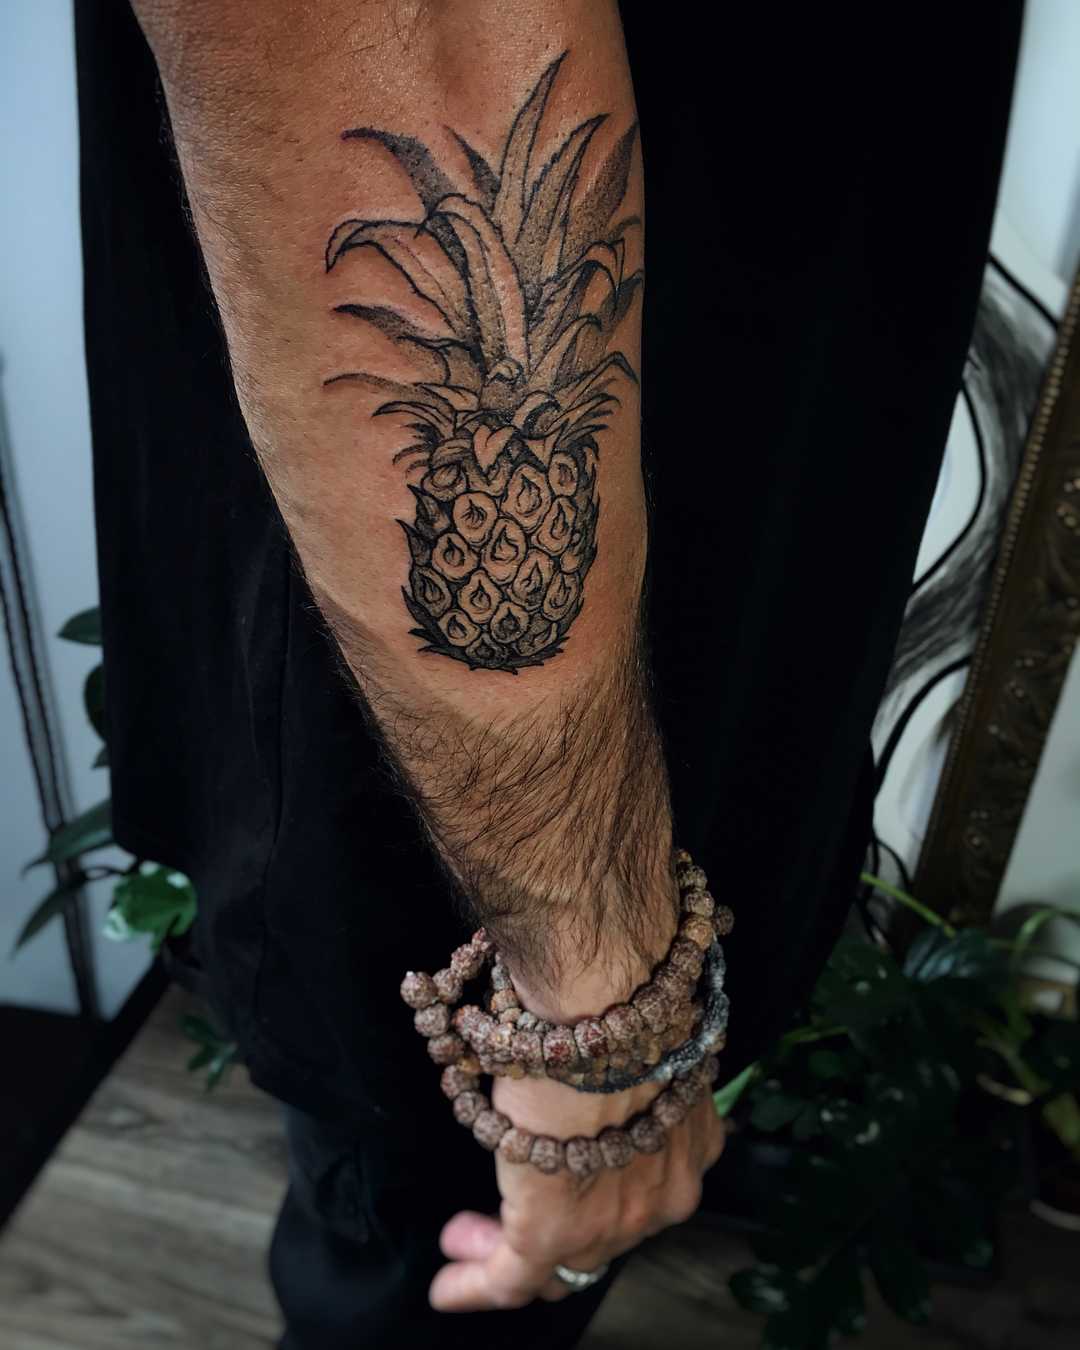 Black pineapple tattoo on the forearm